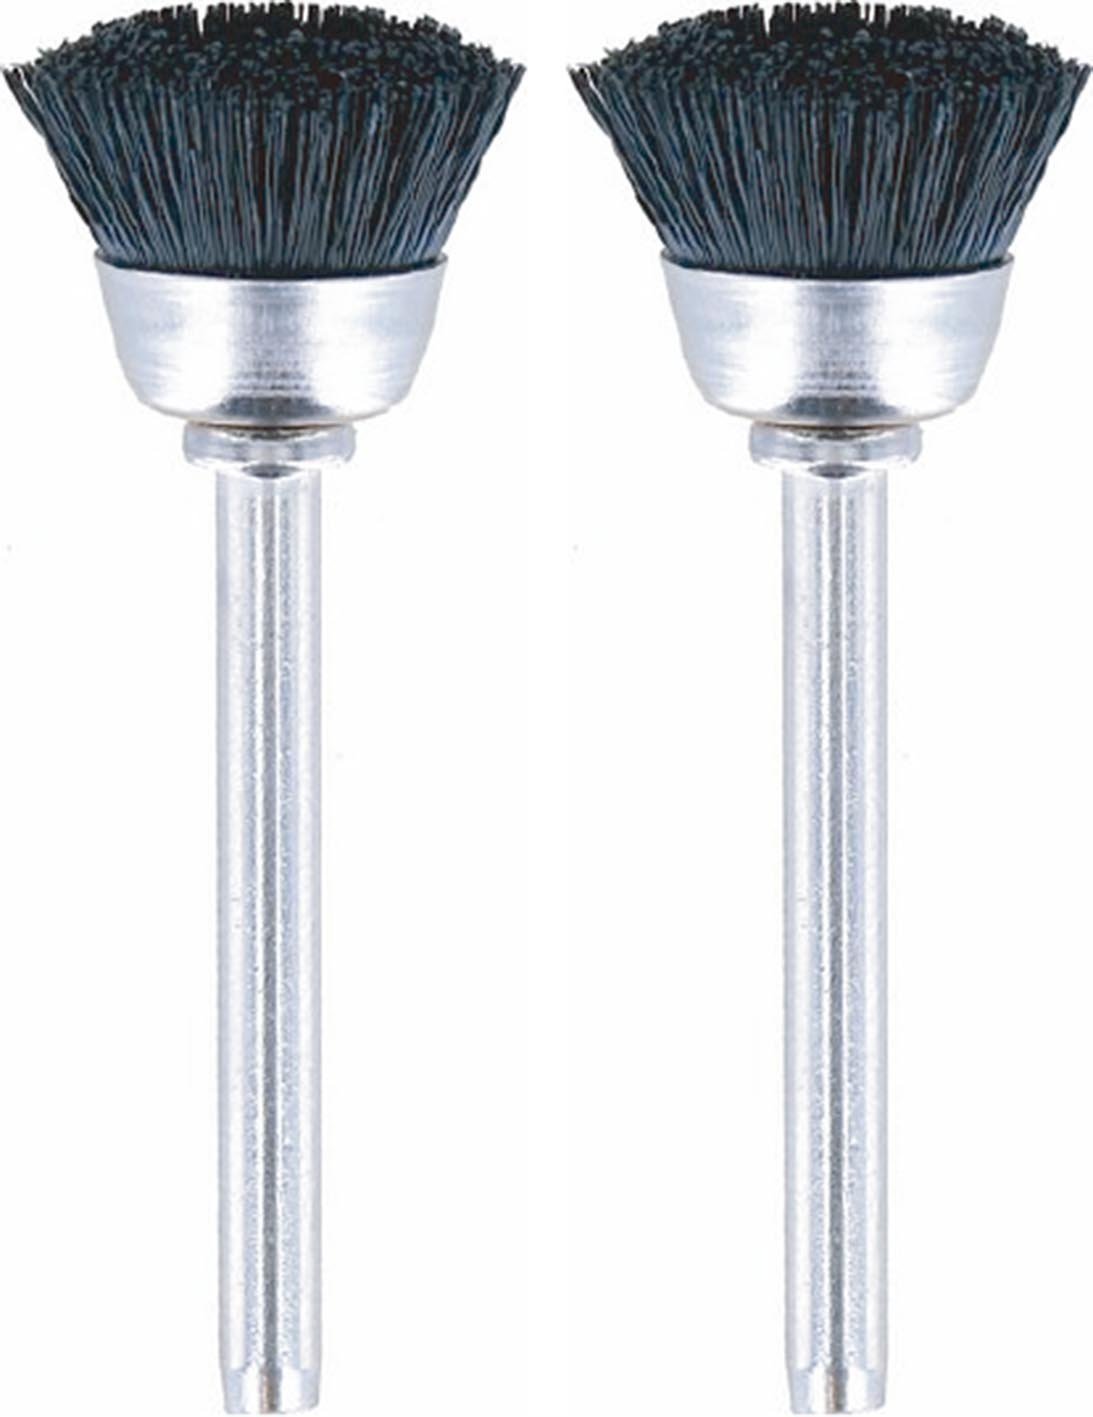 Dremel 404-02 Nylon Bristle Brushes, 1/2 Inch, 2-Pack